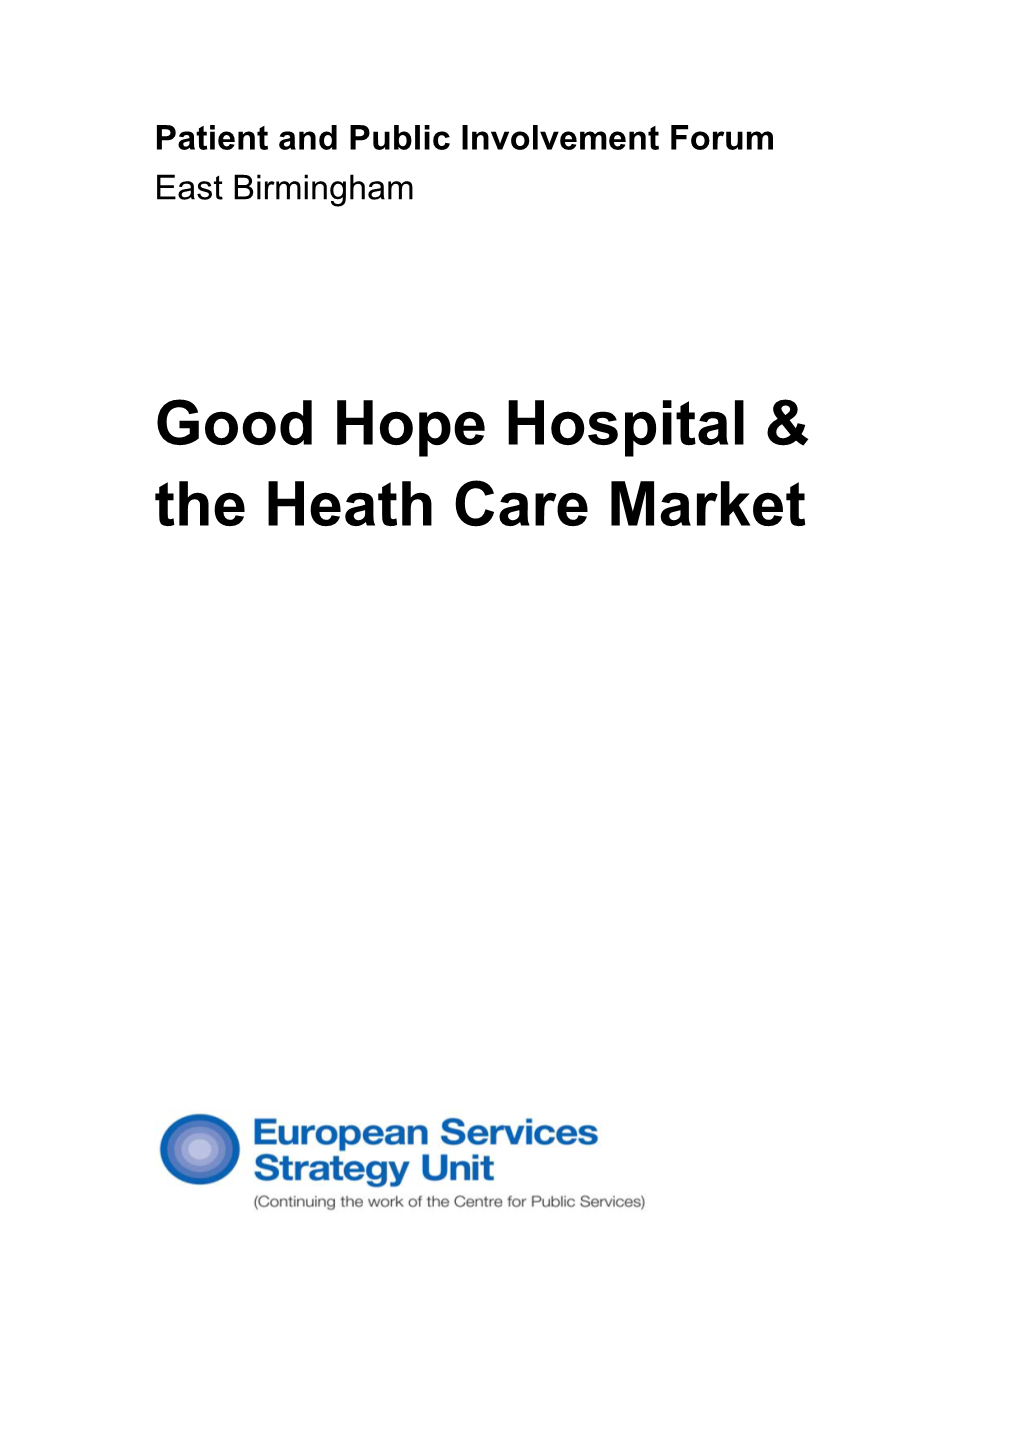 Good Hope Hospital & the Heath Care Market Good Hope Hospital and the Health Care Market